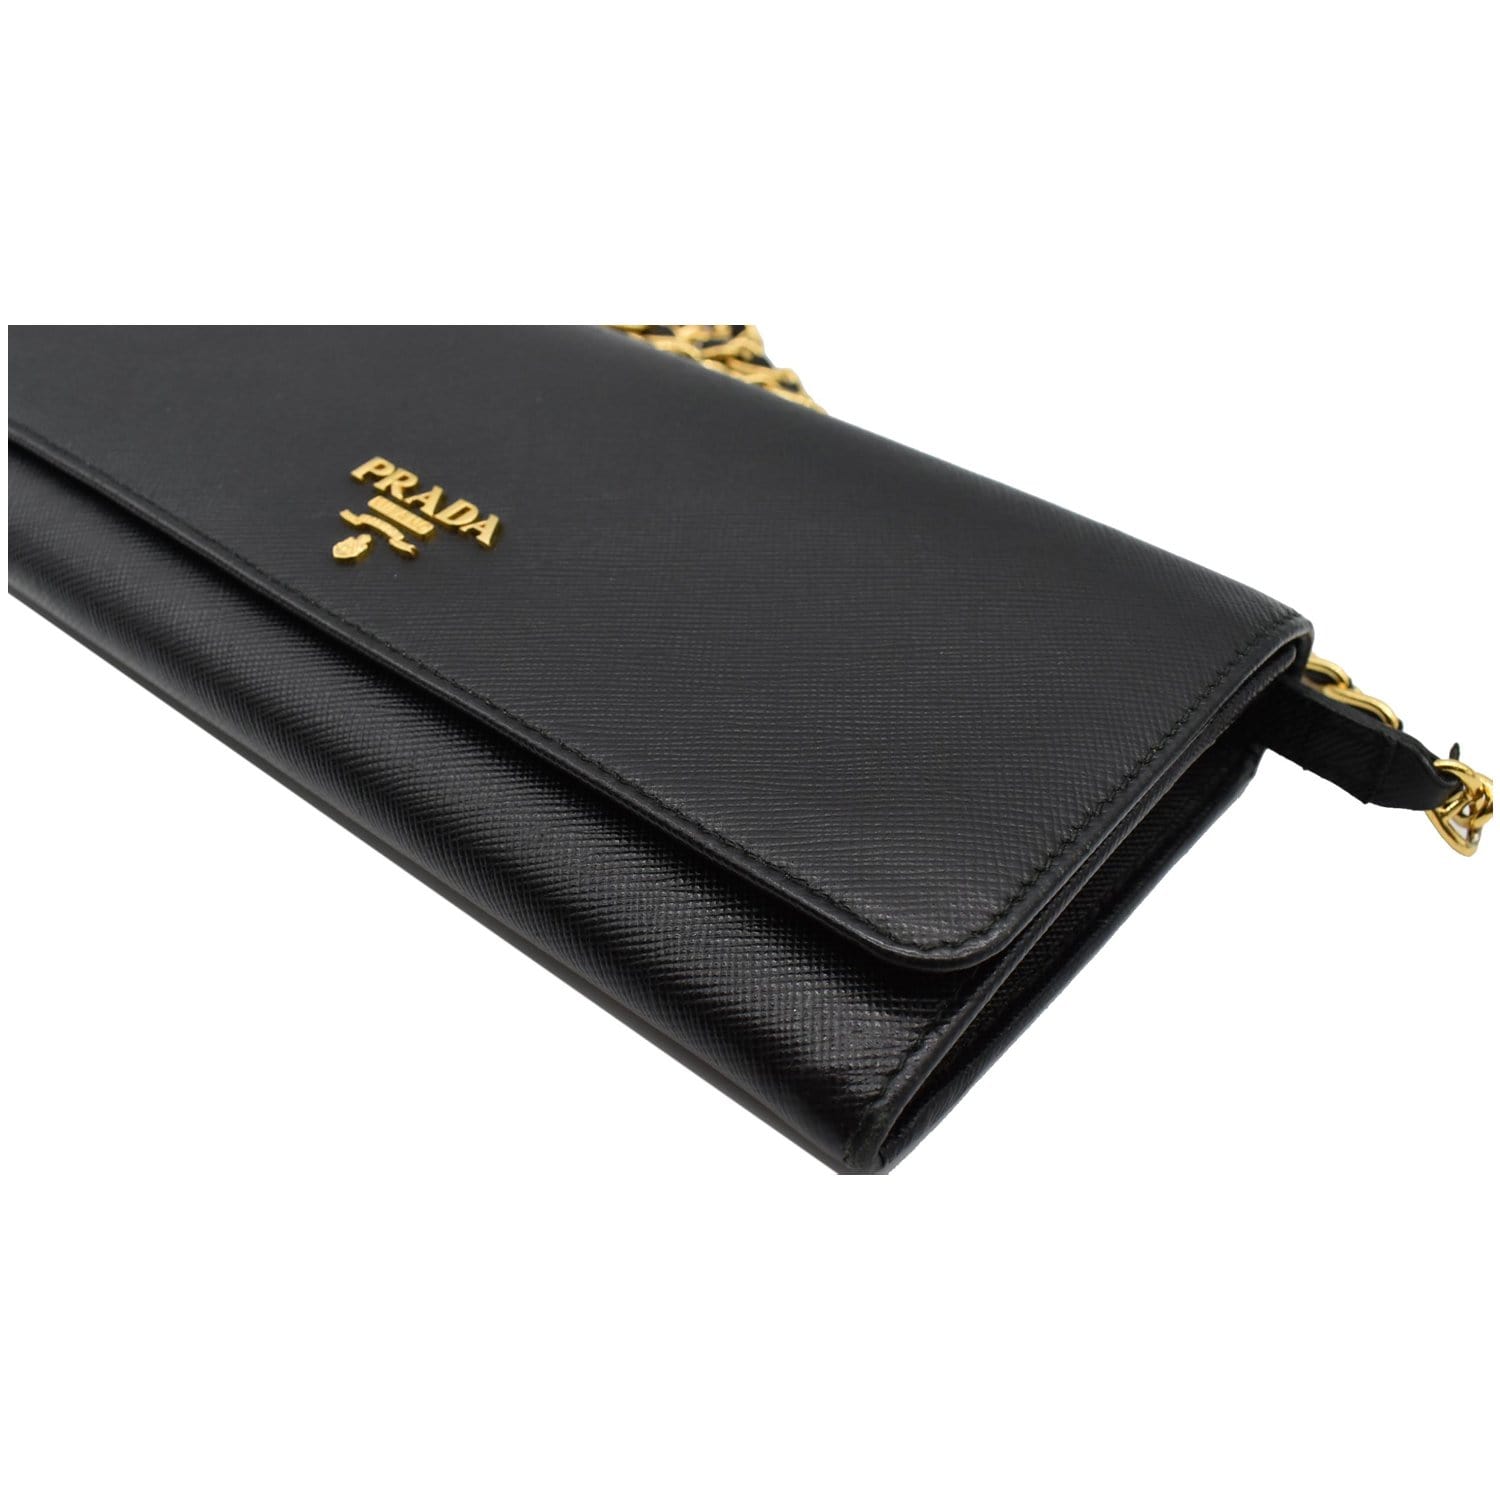 Prada Multi-Pochette Black Bag, Women's Fashion, Bags & Wallets